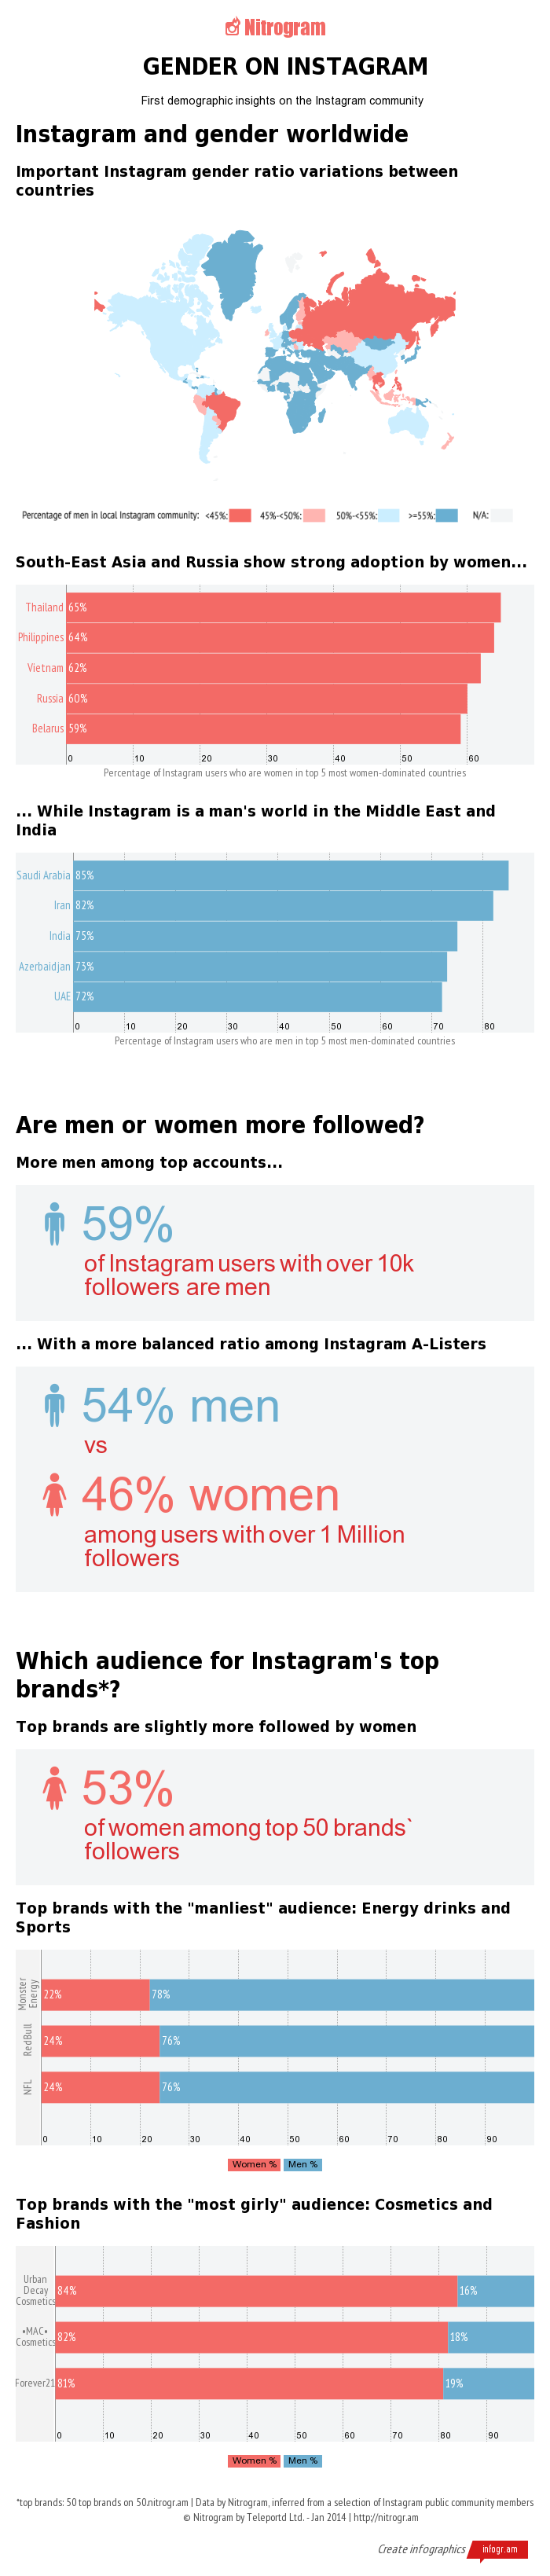 Infographic: Gender on Instagram